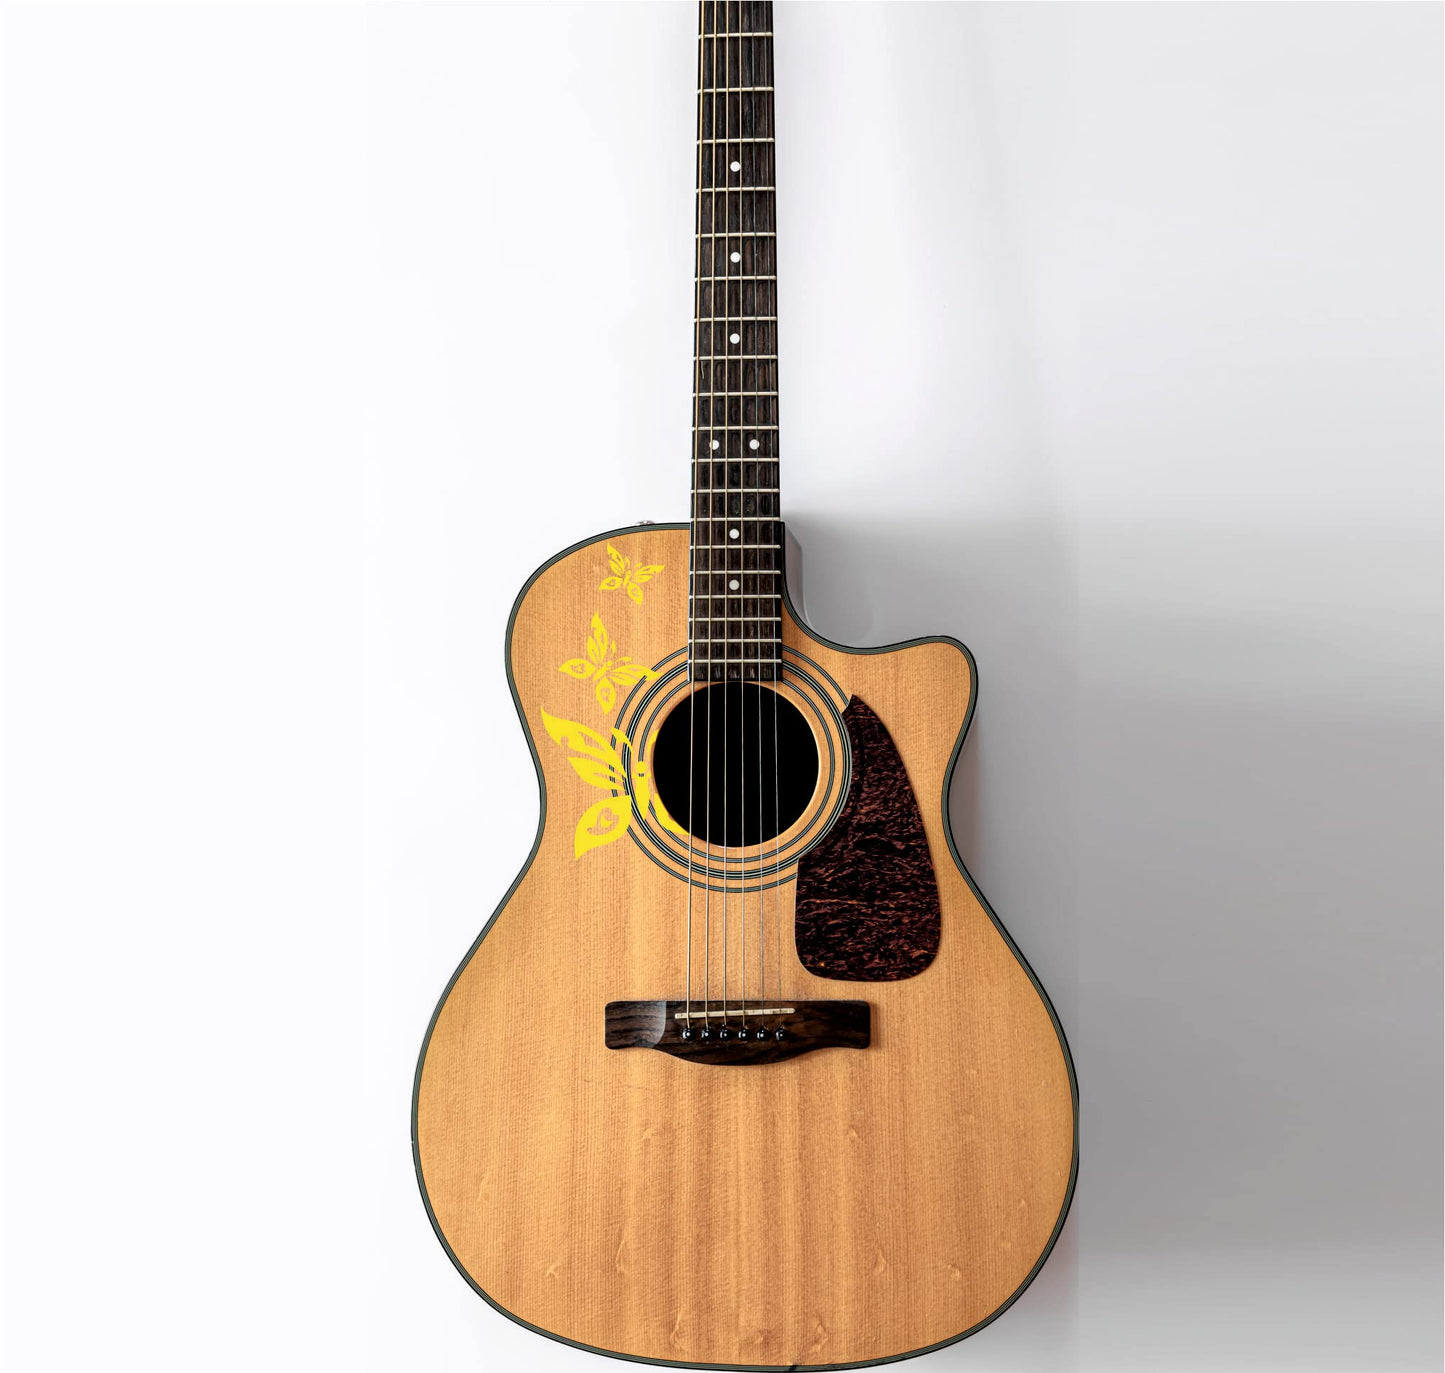 DualColorStampe Adesivi per chitarra classica acustica motivo farfalle (kit da 3 pezzi) decalcomania per chitarra - X0005 a €15.99 solo da DualColorStampe